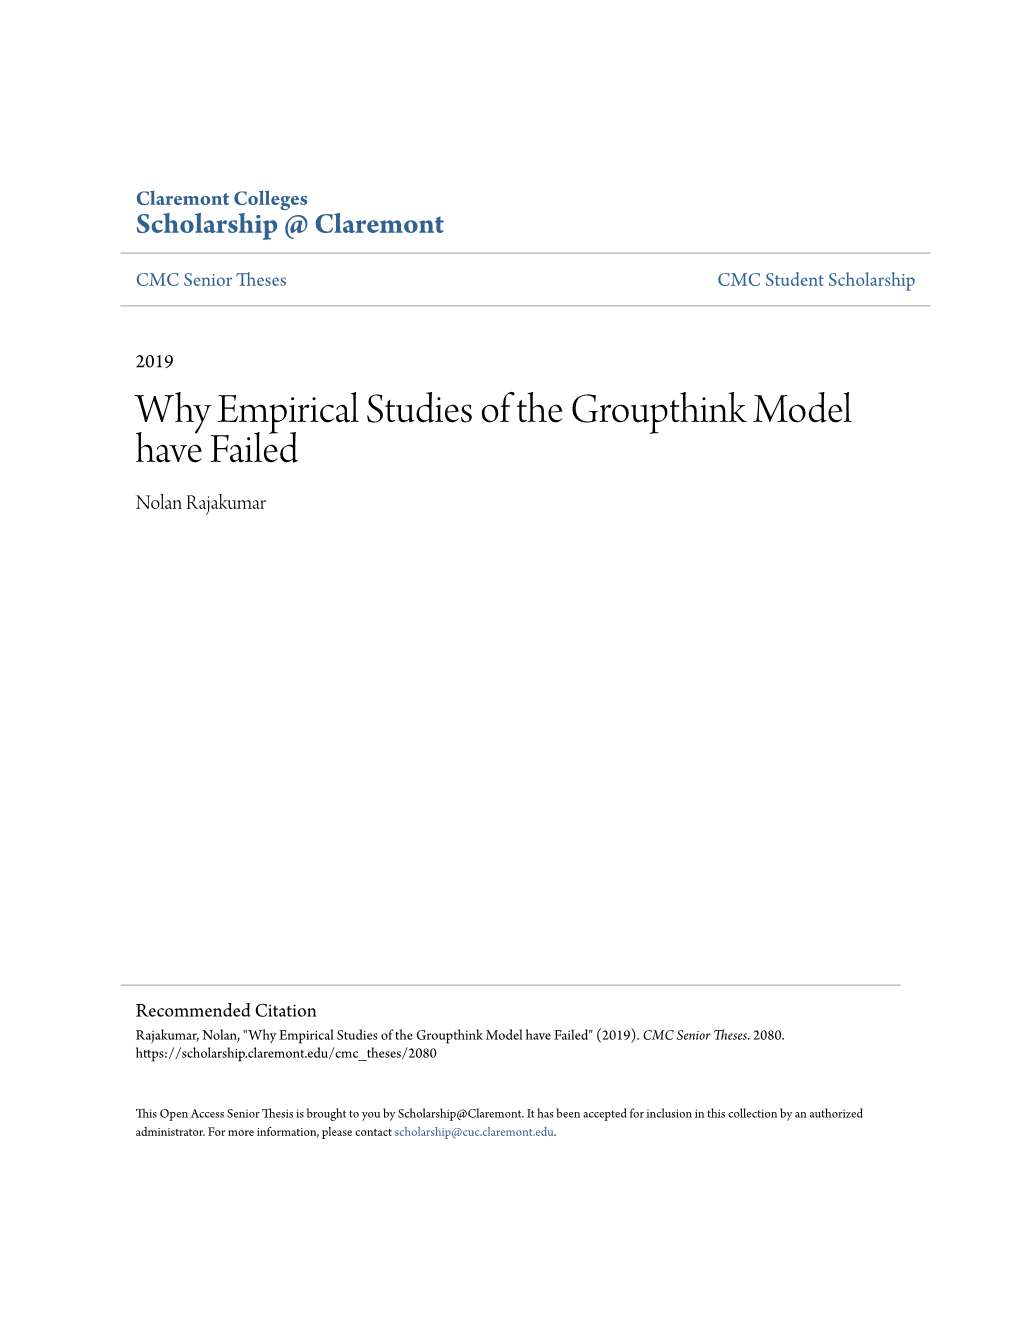 Why Empirical Studies of the Groupthink Model Have Failed Nolan Rajakumar